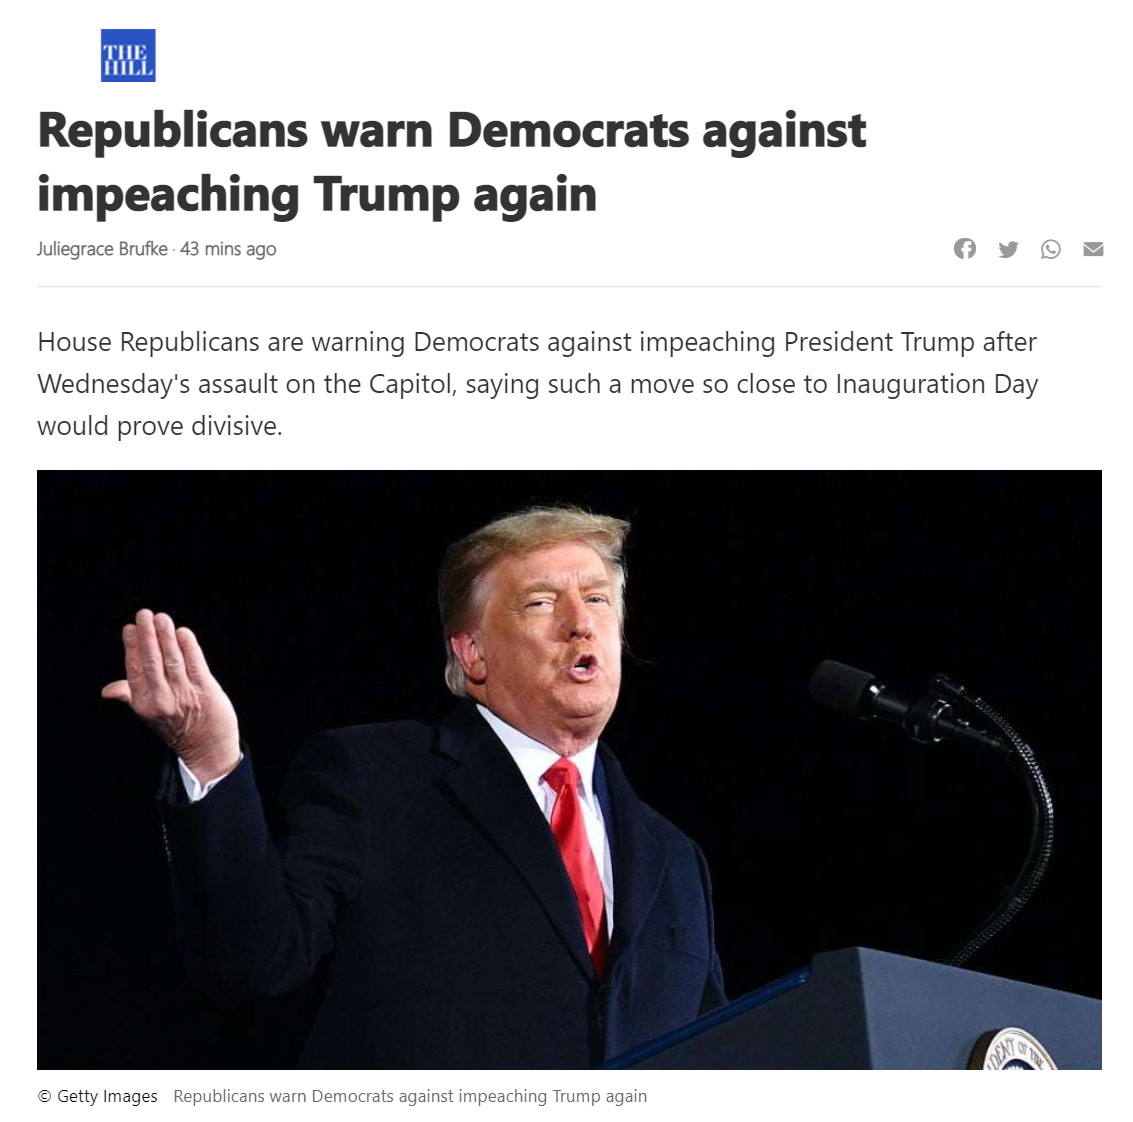 Republicans warn Democrats impeachment Blank Meme Template